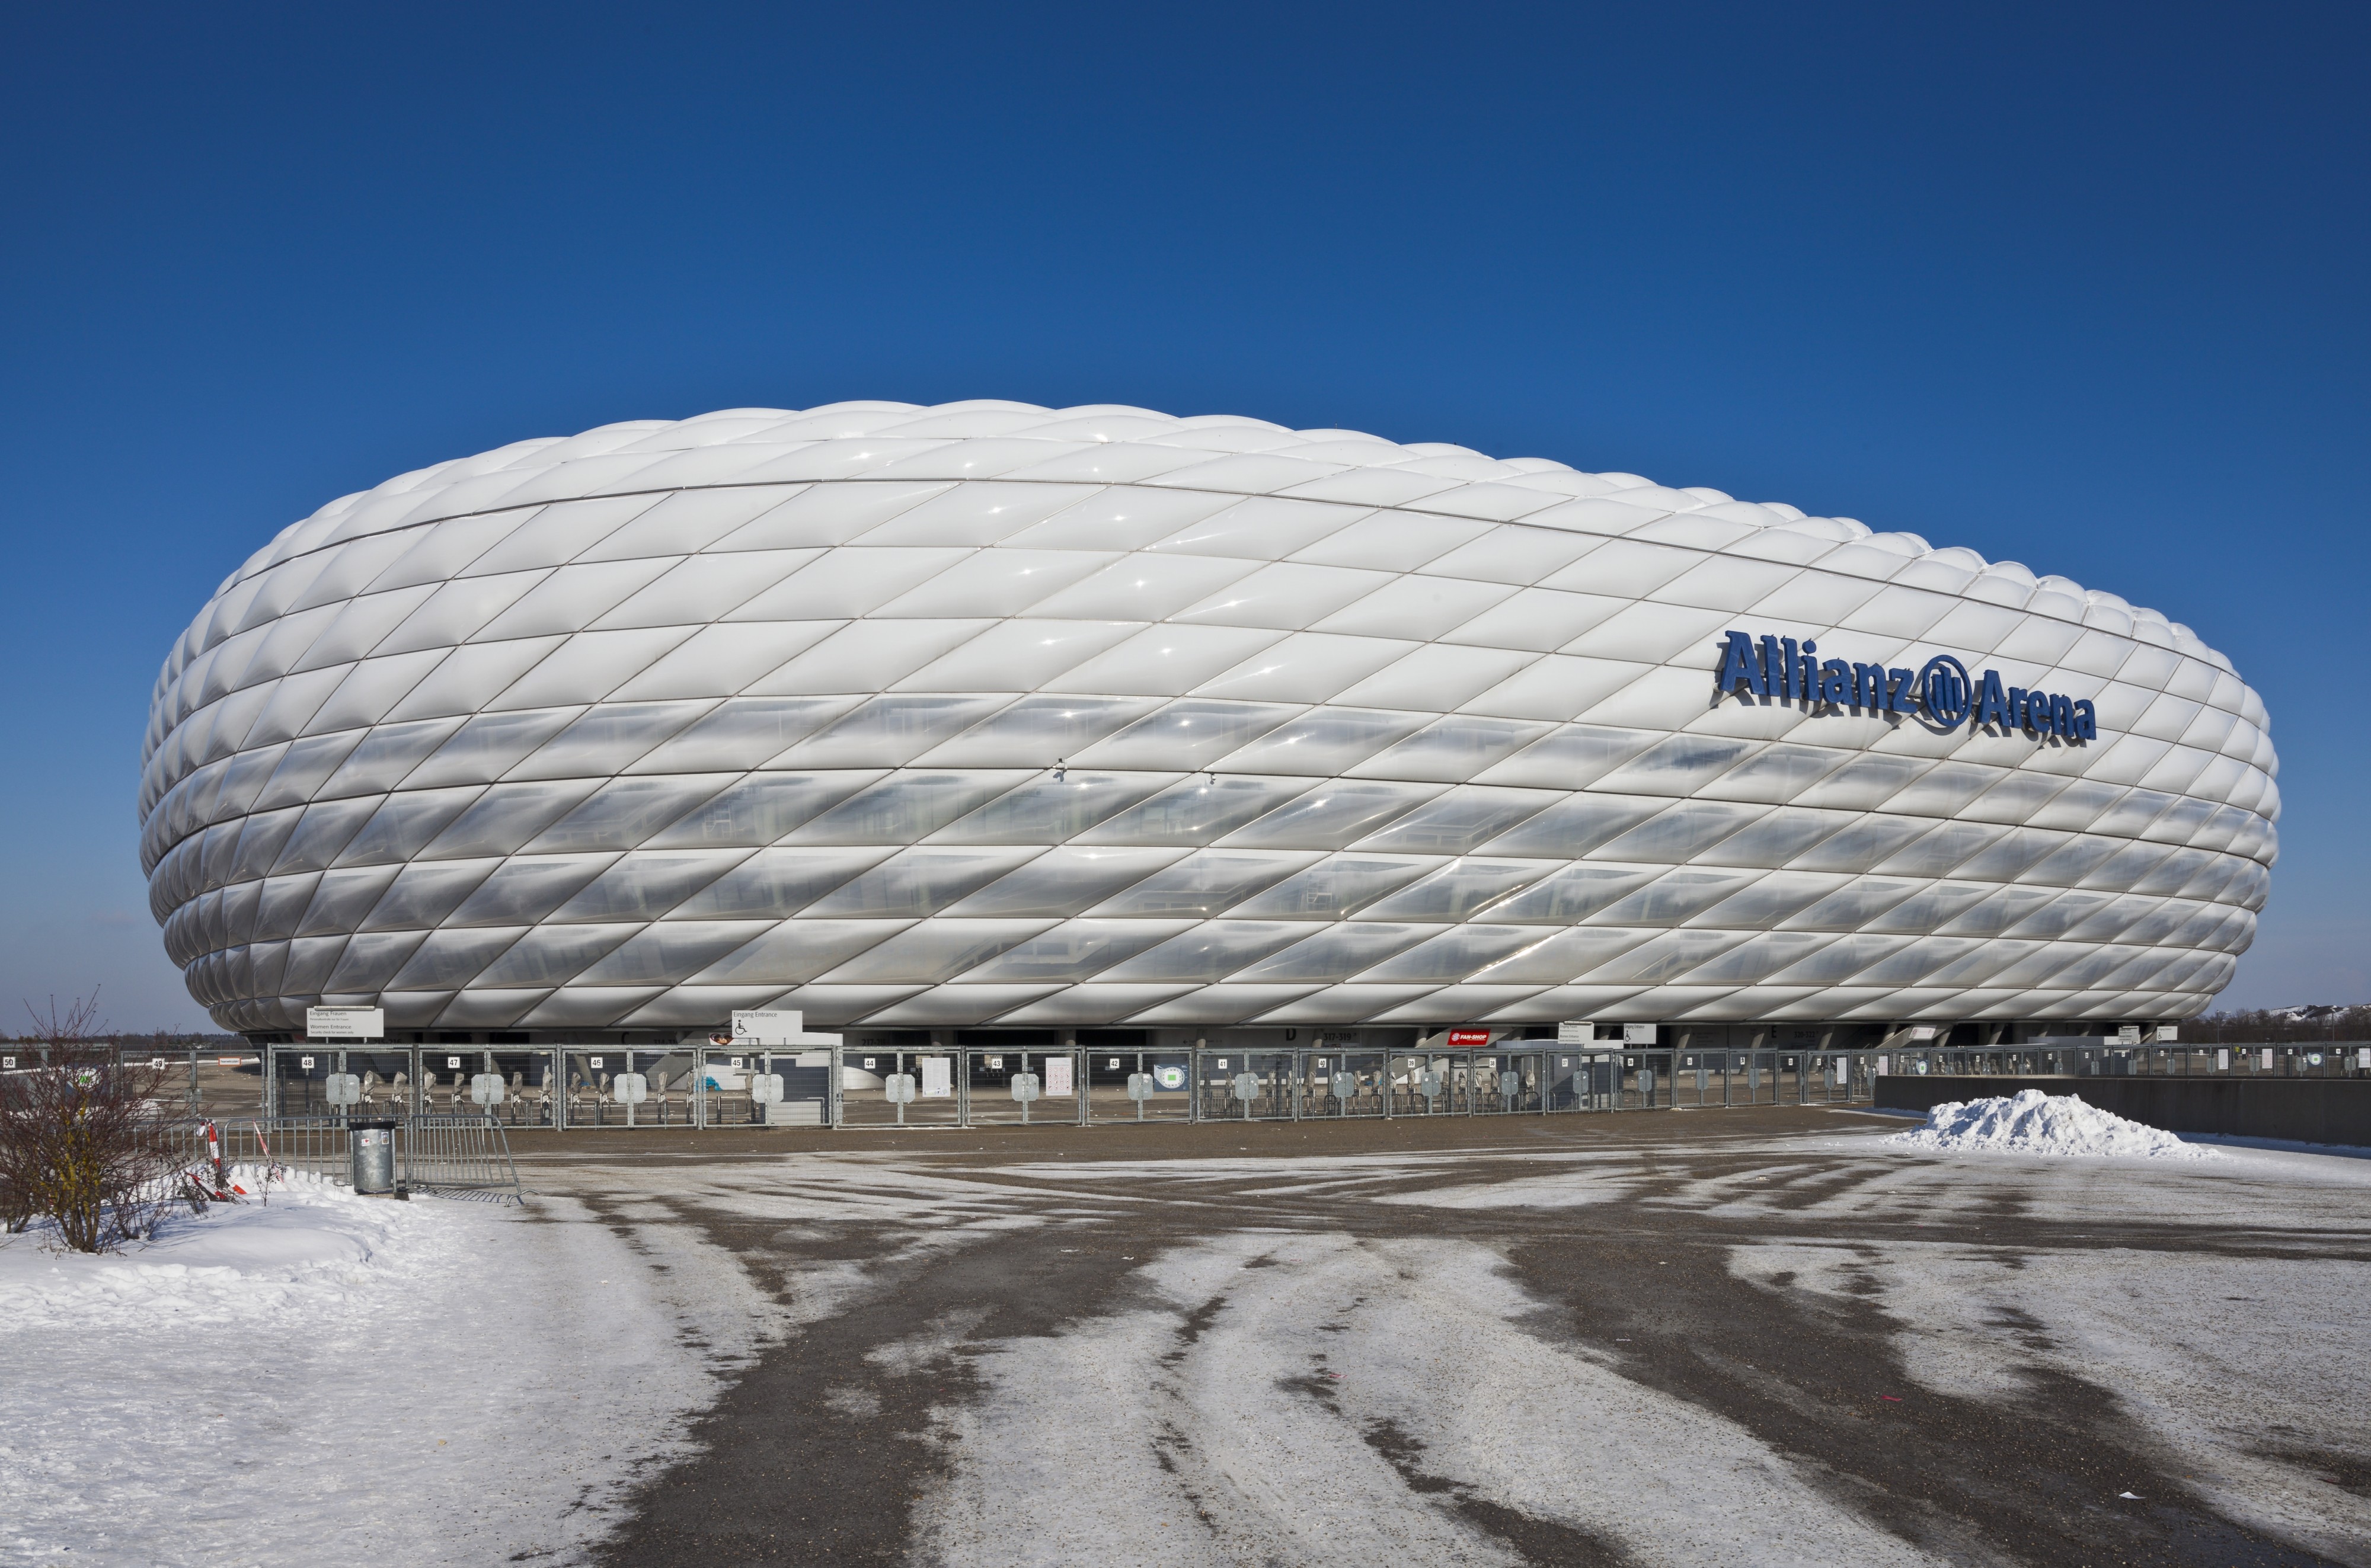 Allianz Arena, Múnich, Alemania, 2013-02-11, DD 15